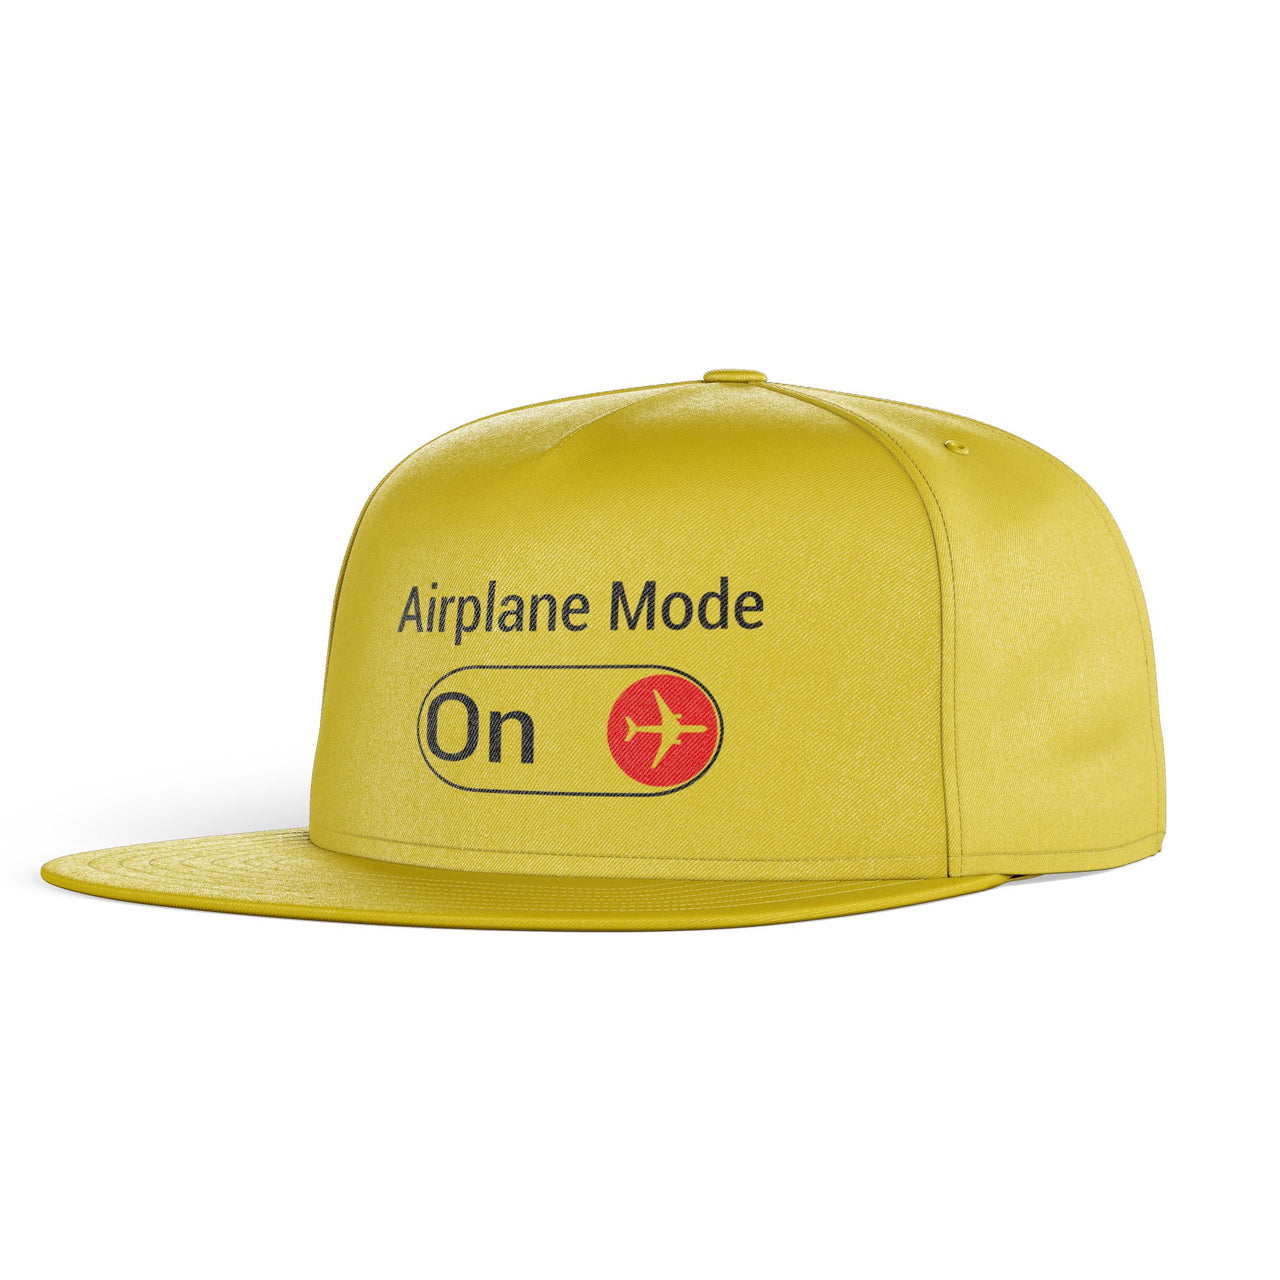 Airplane Mode On Designed Snapback Caps & Hats